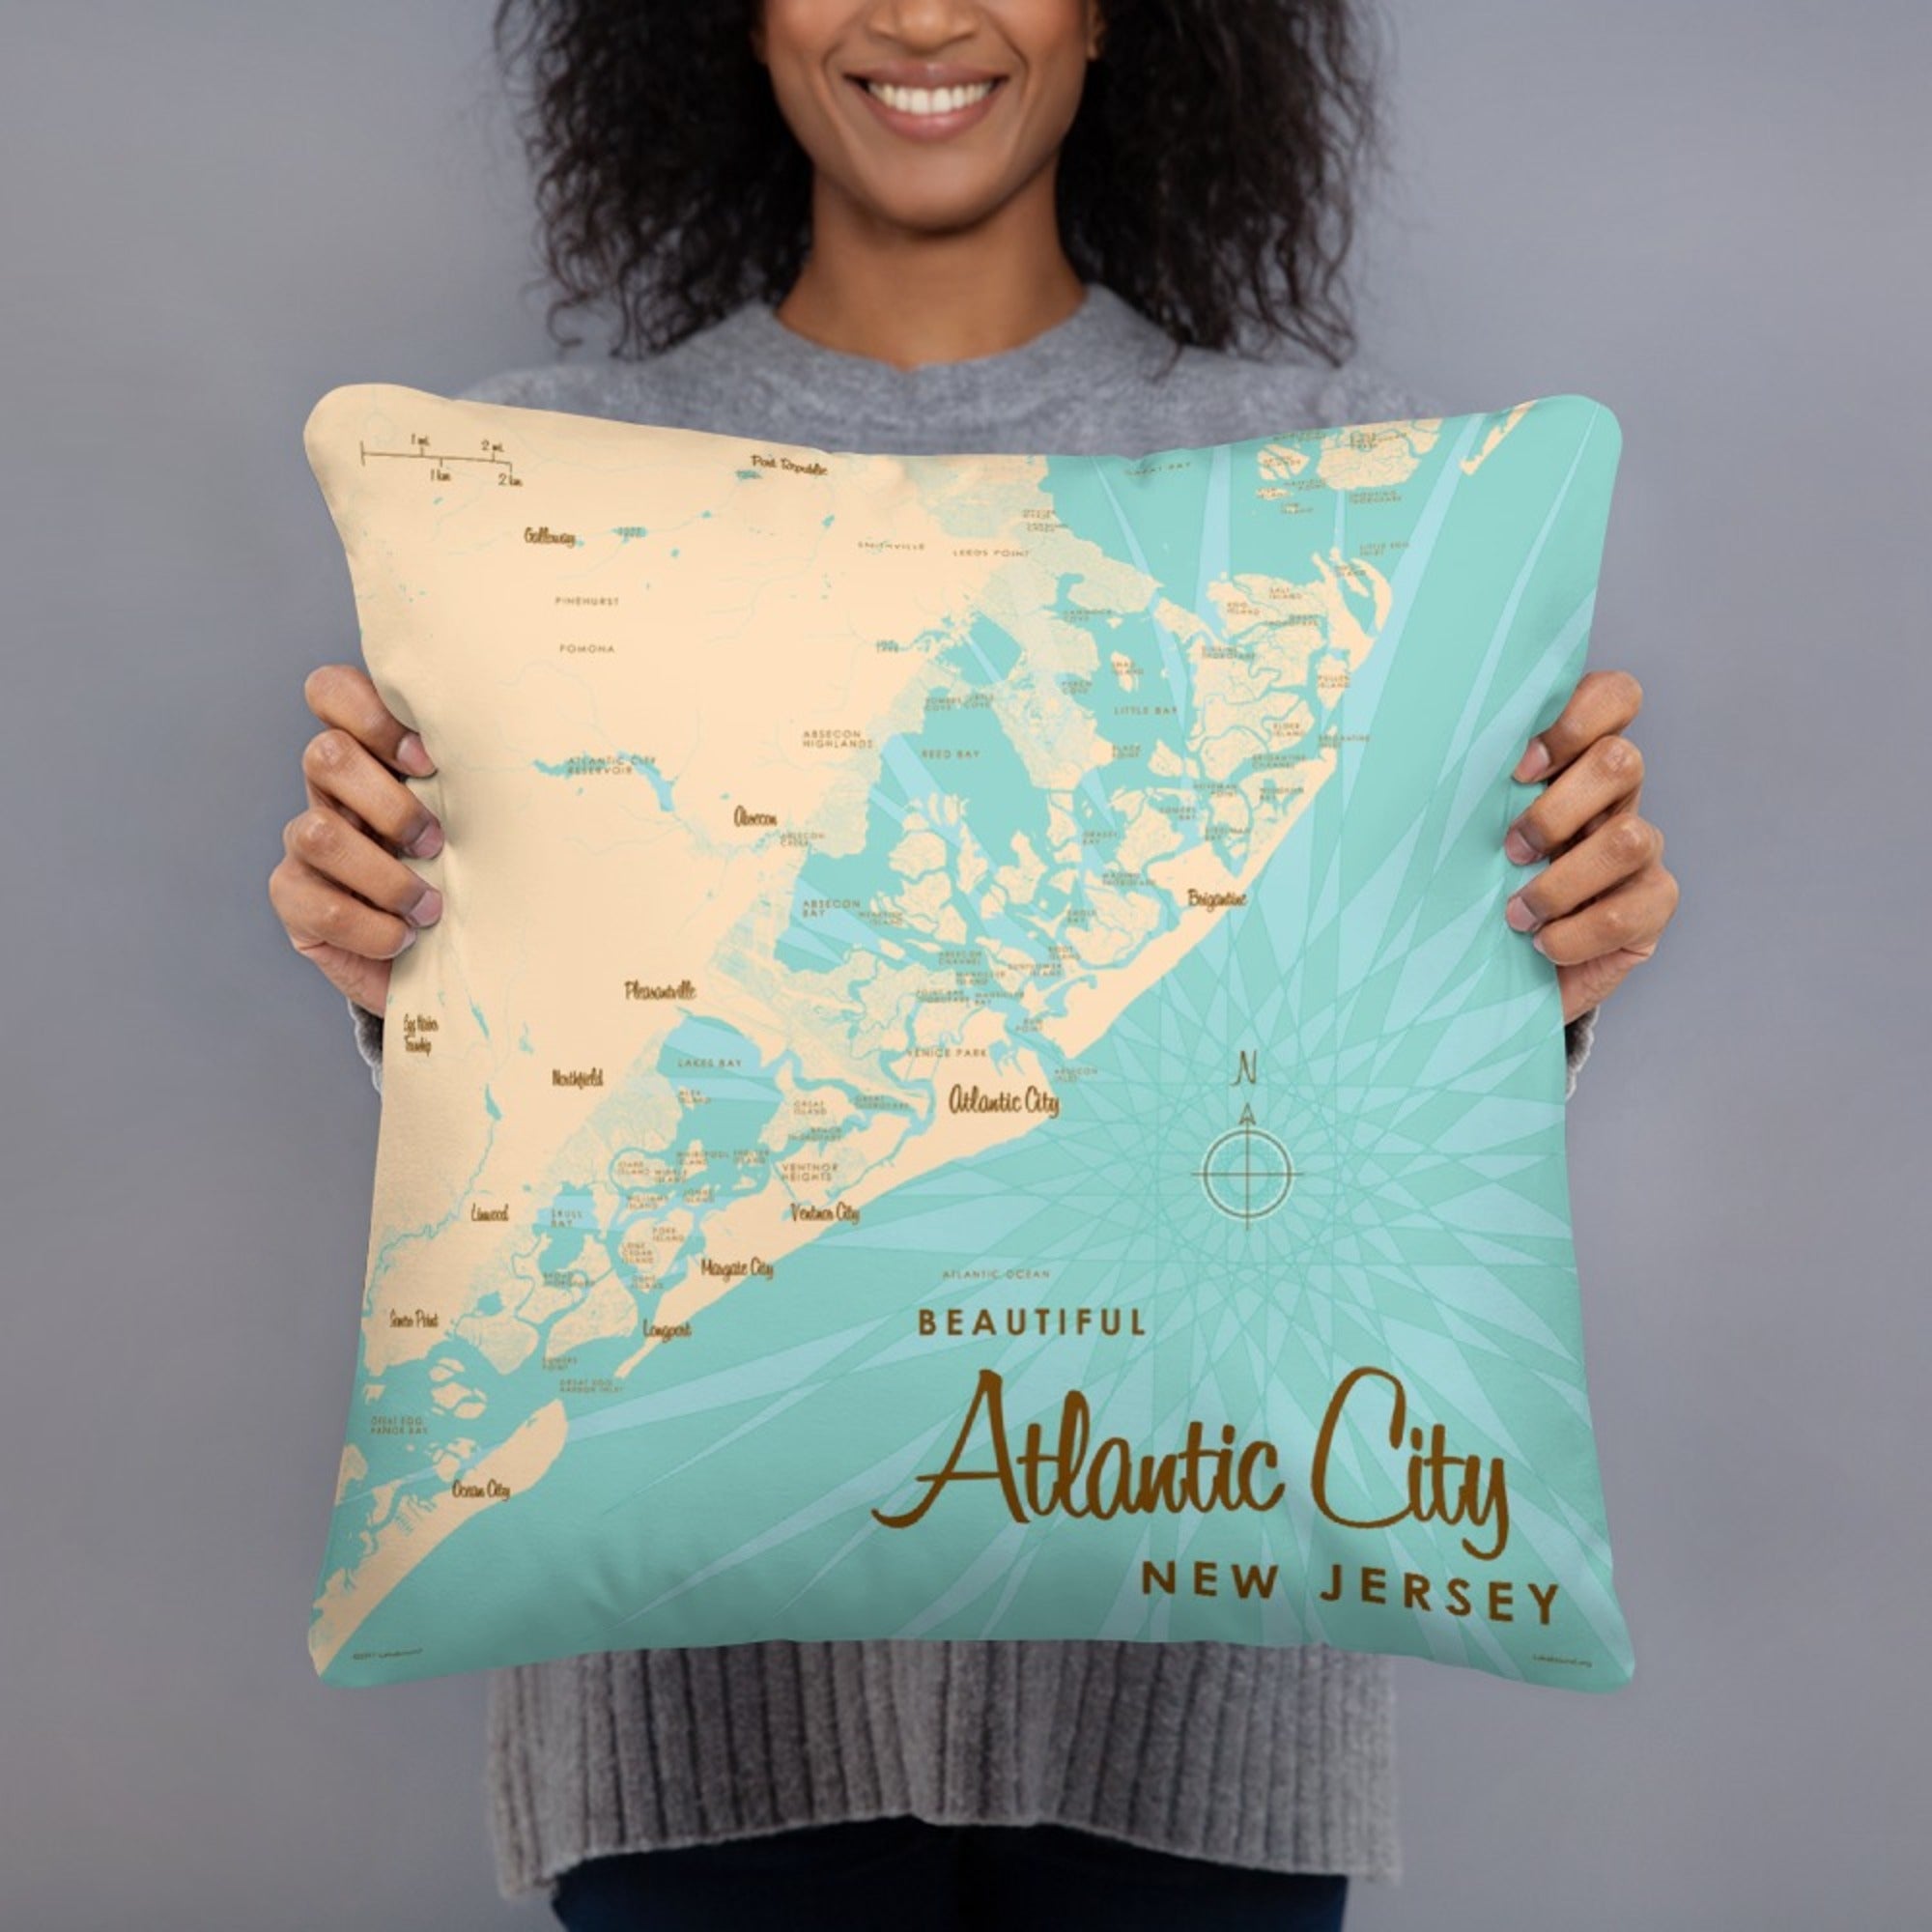 Atlantic City New Jersey Pillow